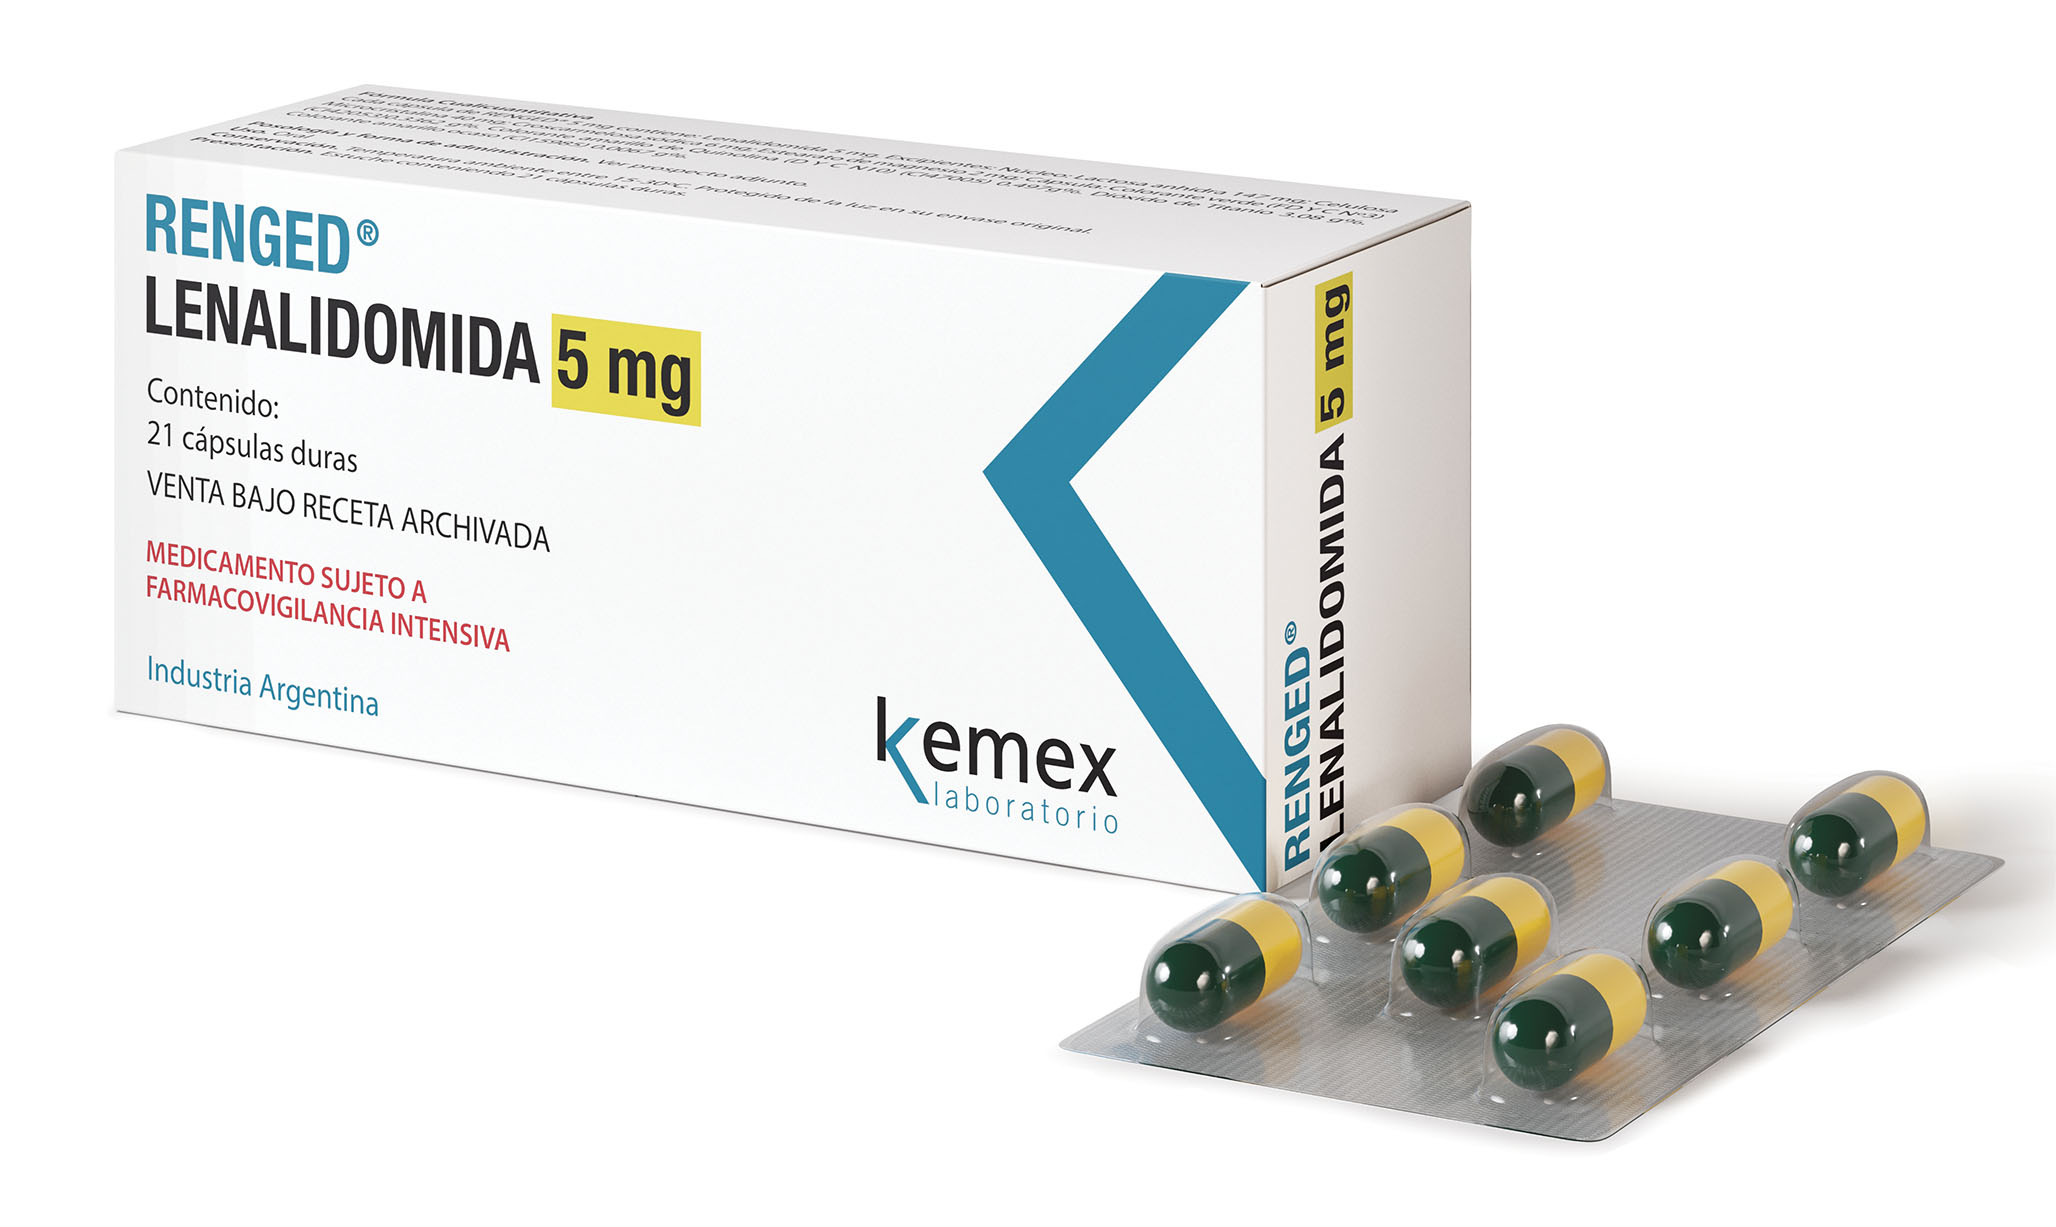 Lenalidomide 5 mg